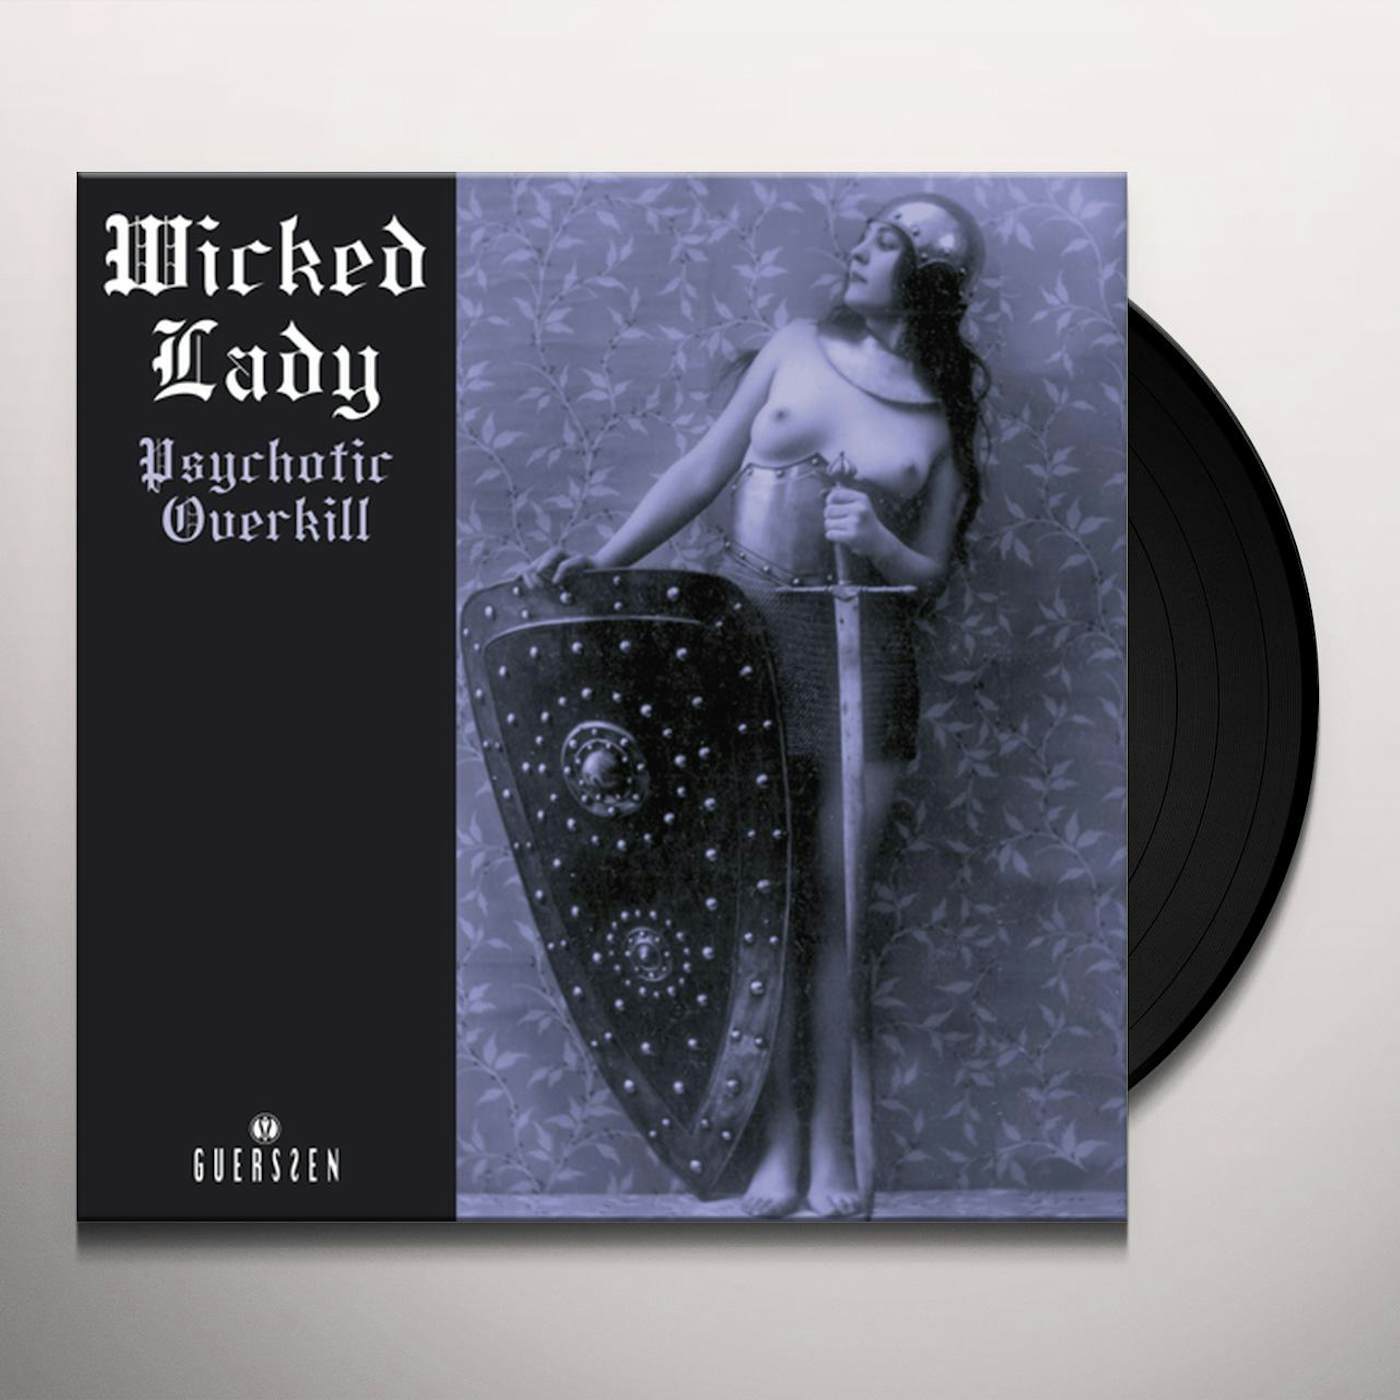 Wicked Lady Psychotic Overkill Vinyl Record